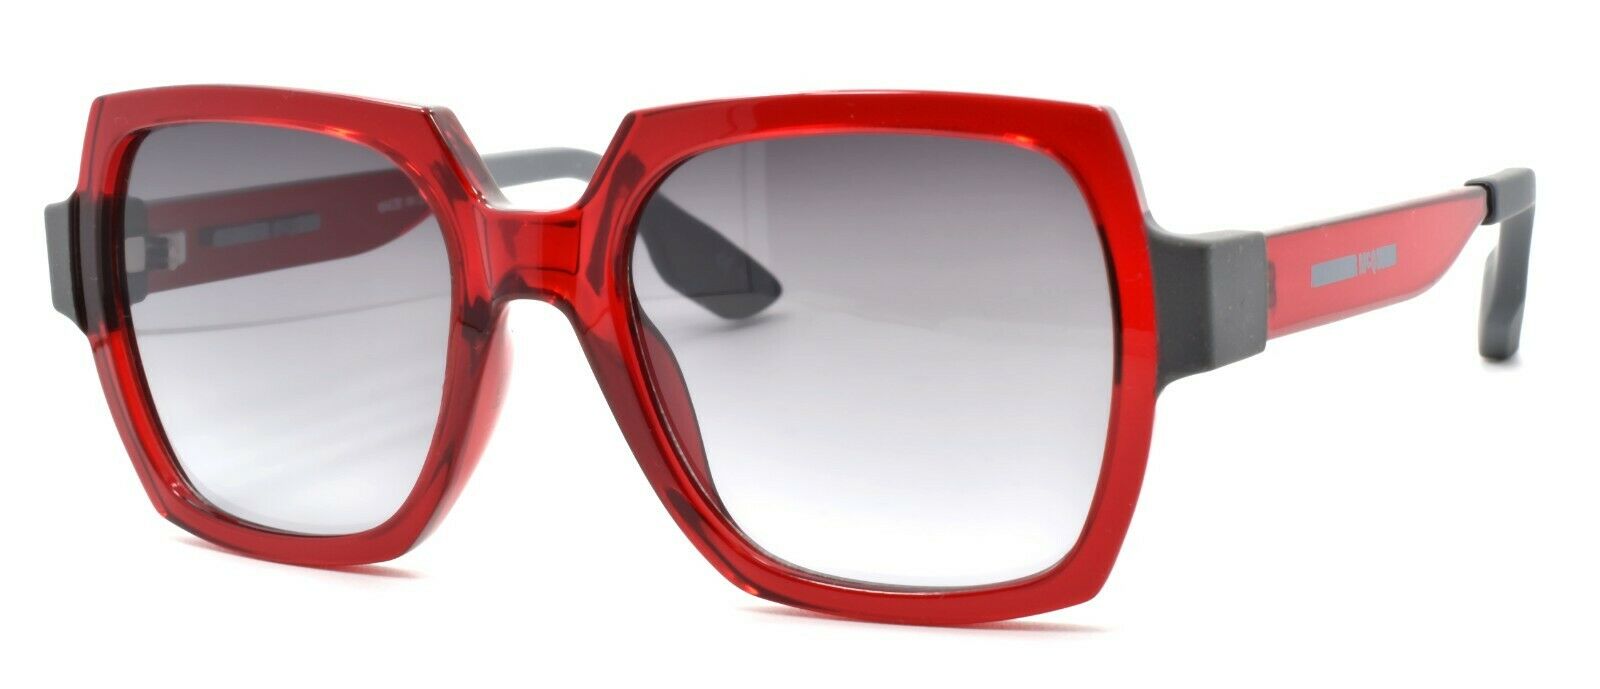 1-McQ Alexander McQueen MQ0013S 003 Women's Sunglasses Red & Gray / Smoke Gradient-889652001906-IKSpecs